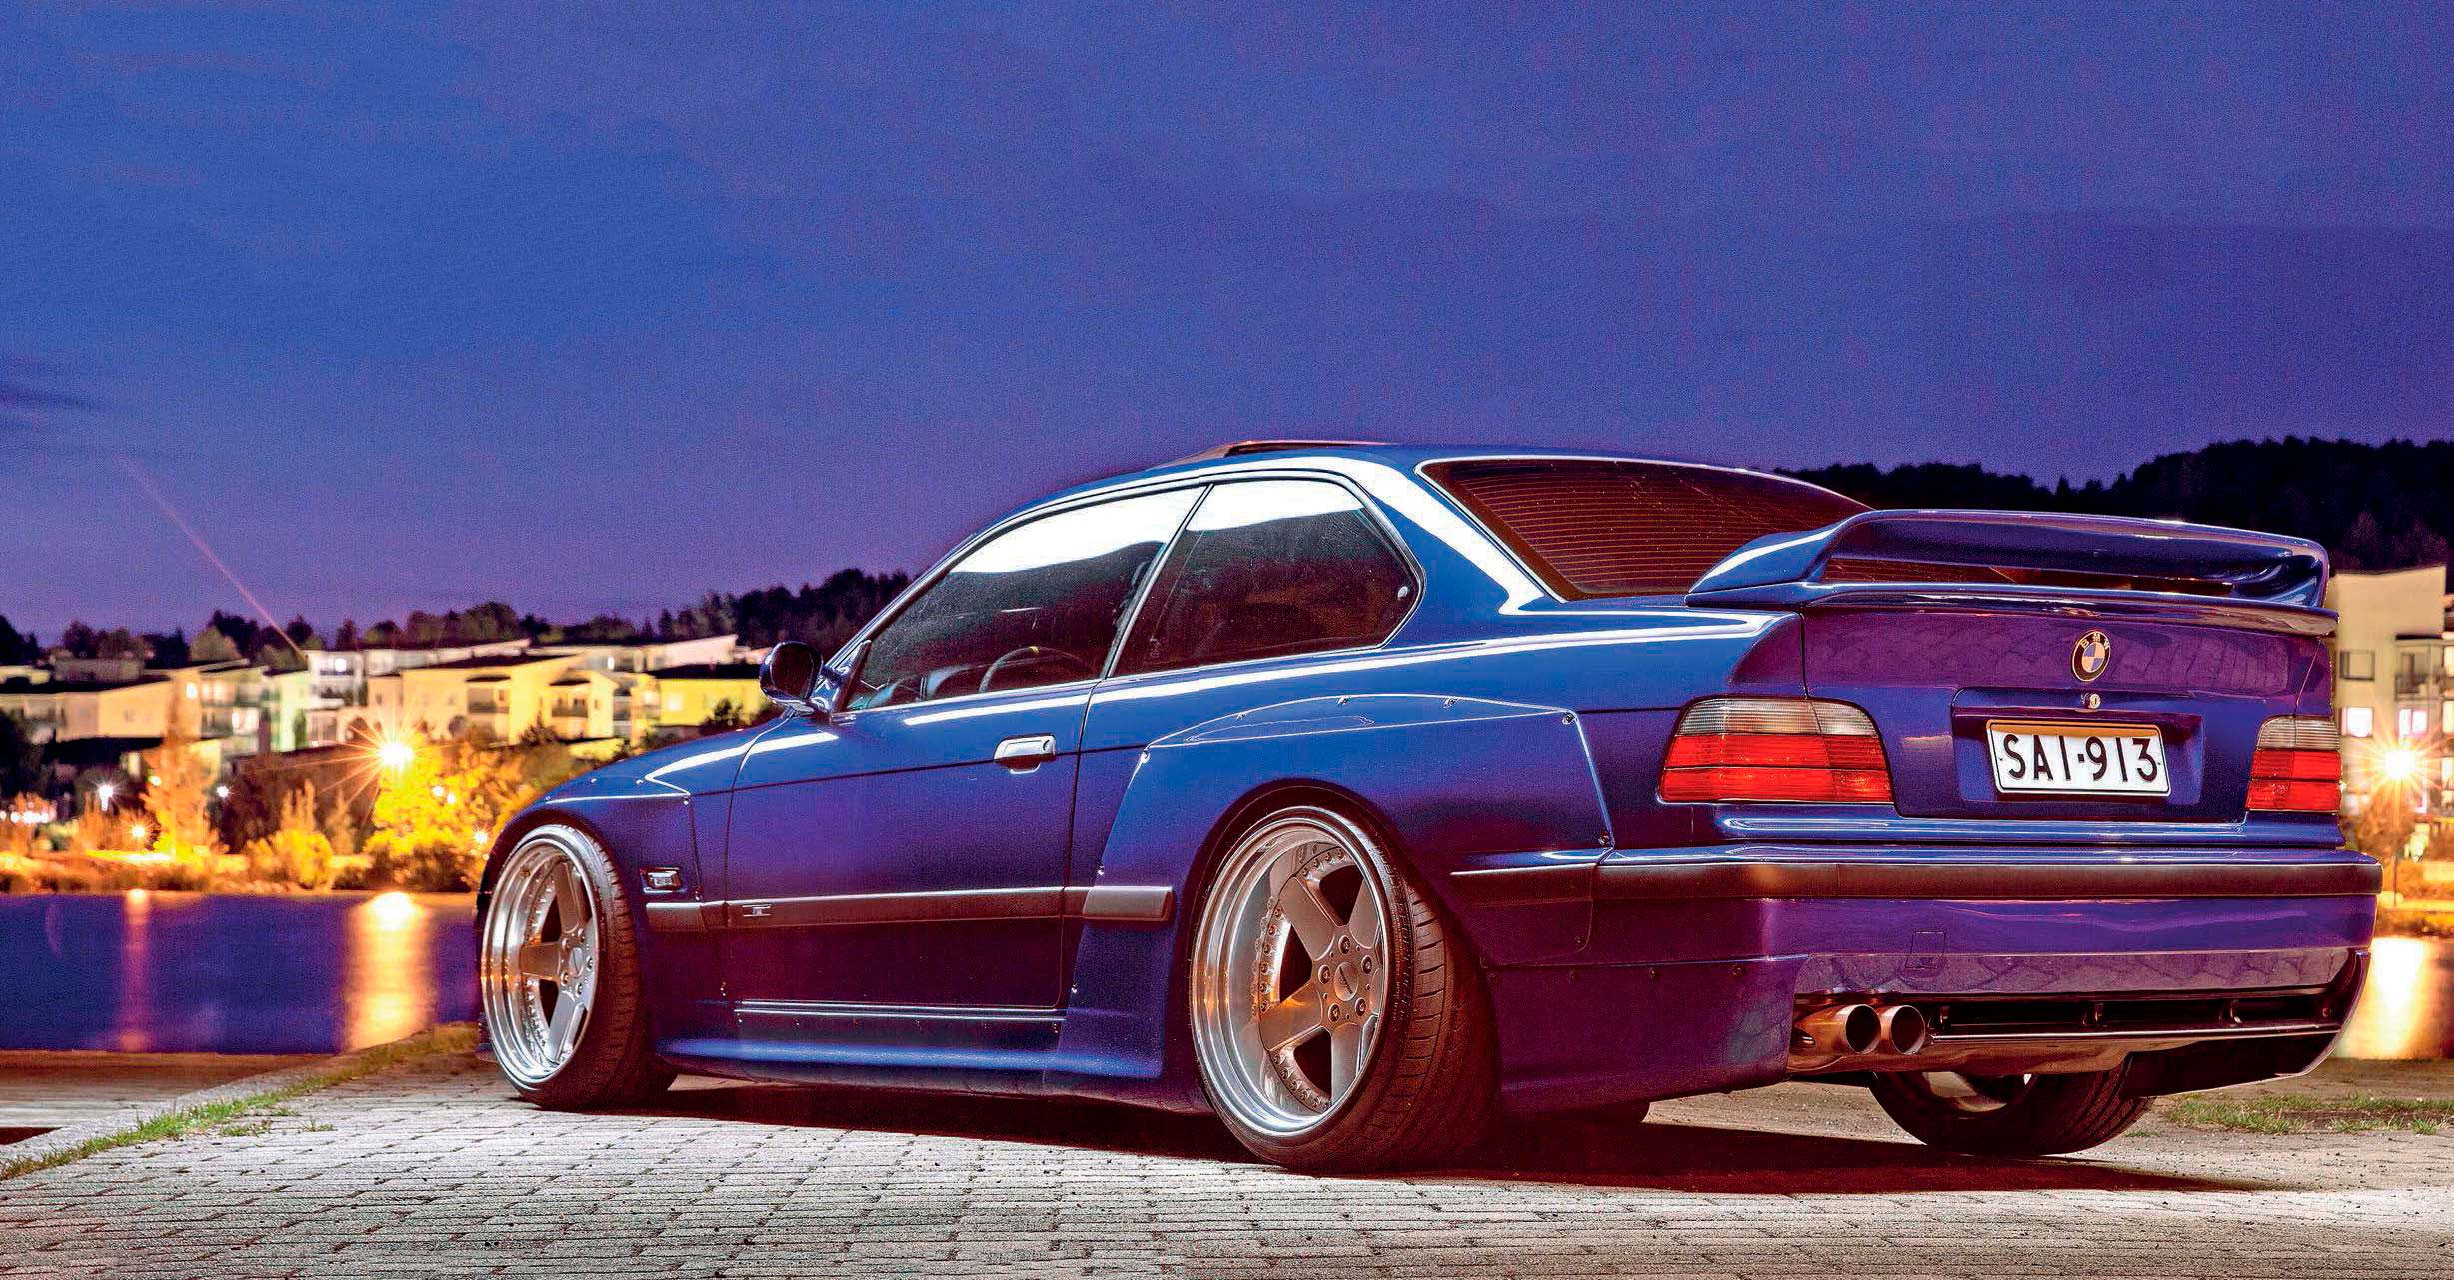 965bhp tuned Turbo widebody BMW M3 Coupe E36 DriveMy